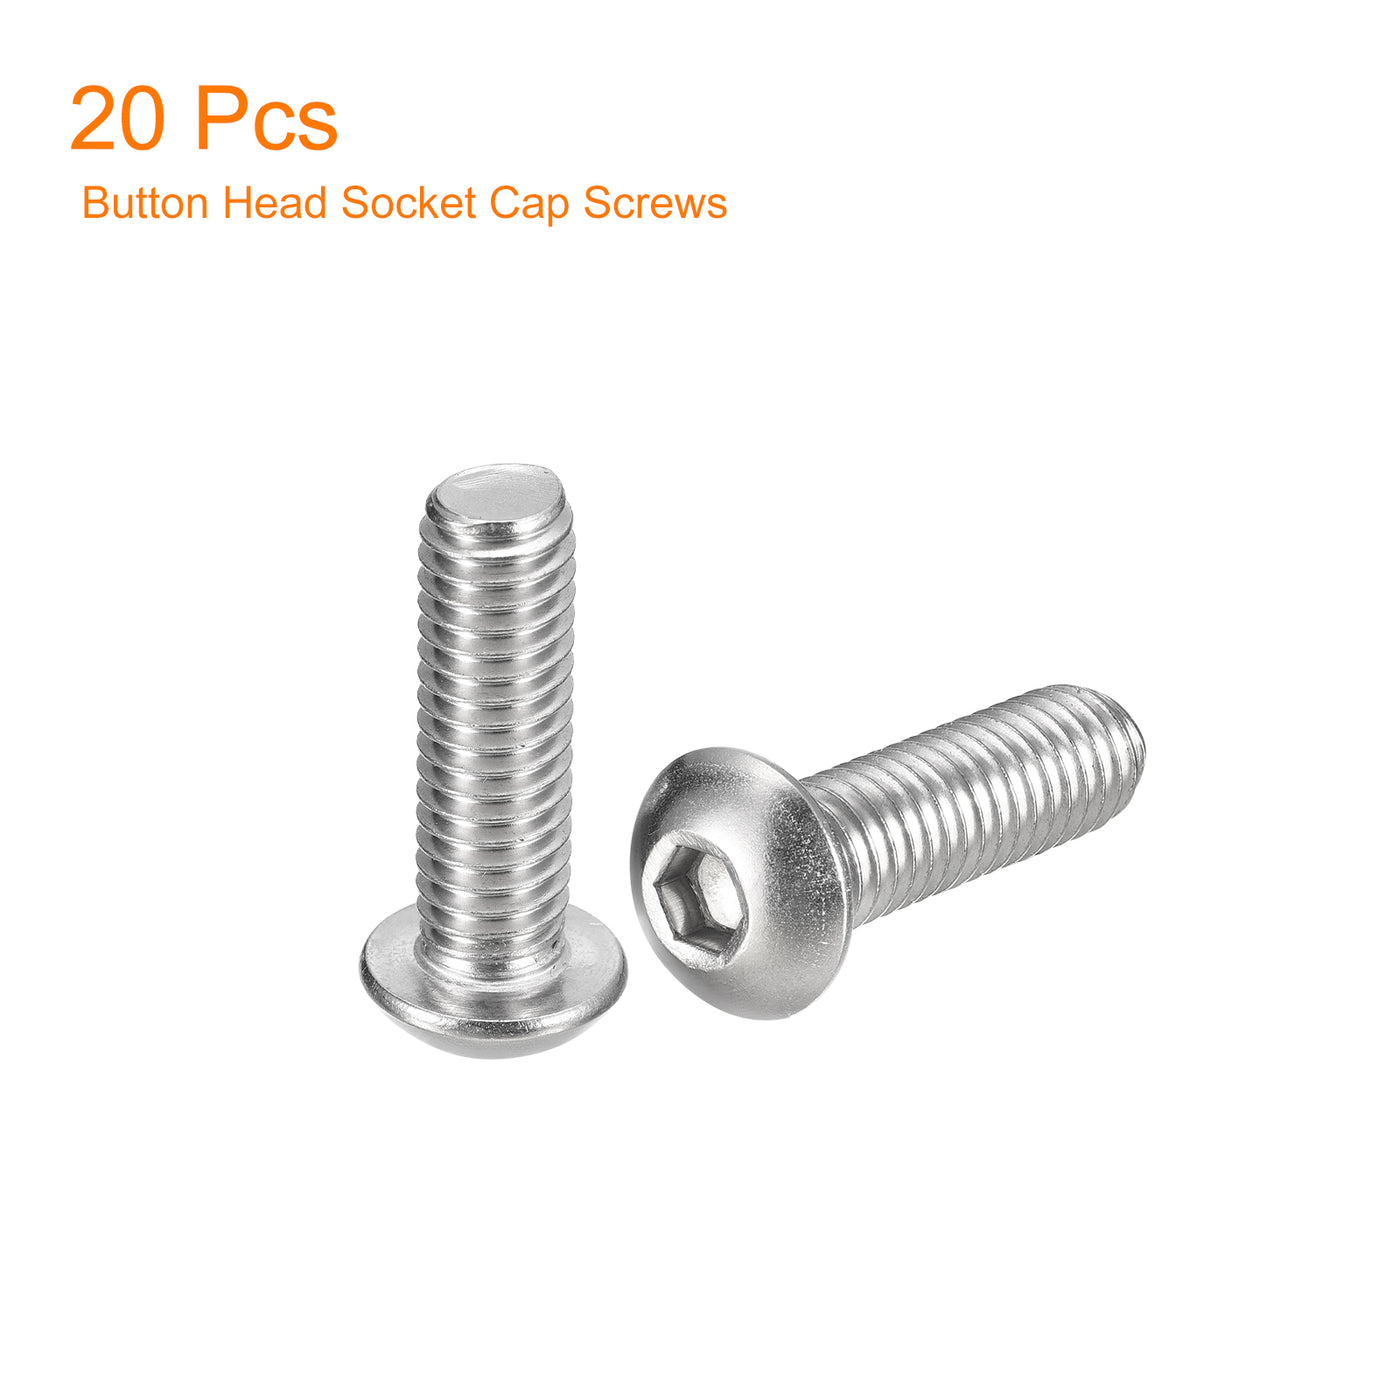 uxcell Uxcell 3/8-16x1-1/4" Button Head Socket Cap Screws, 20pcs 304 Stainless Steel Screws